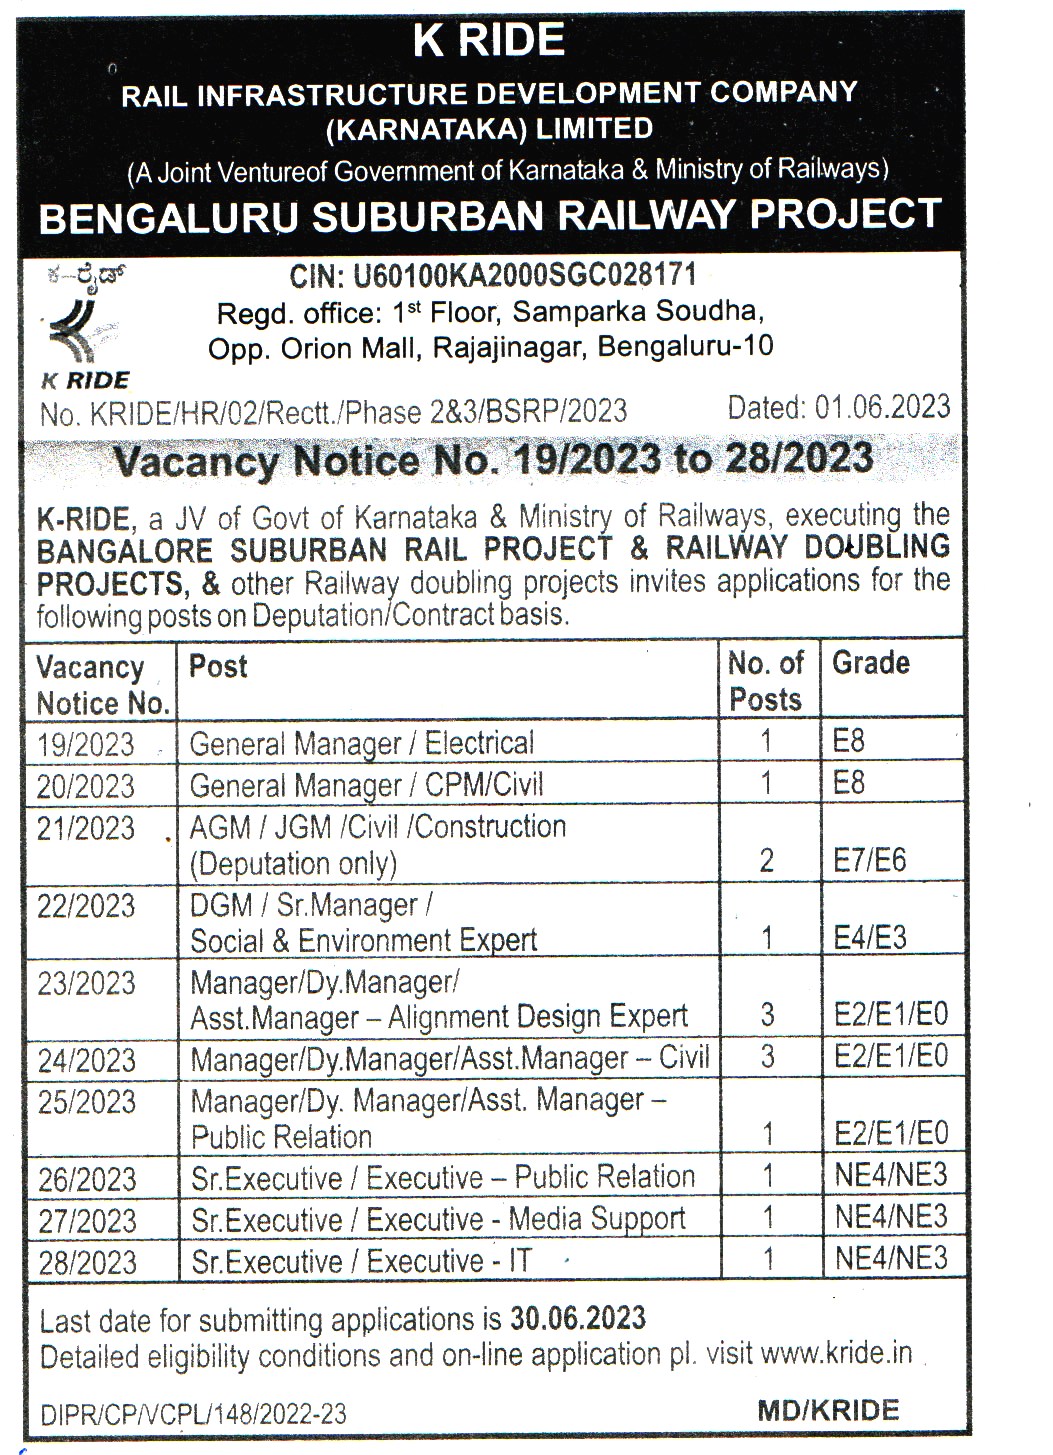 Government Jobs Rail Infrastructure Development Company (K Ride) Karnataka Recruitment